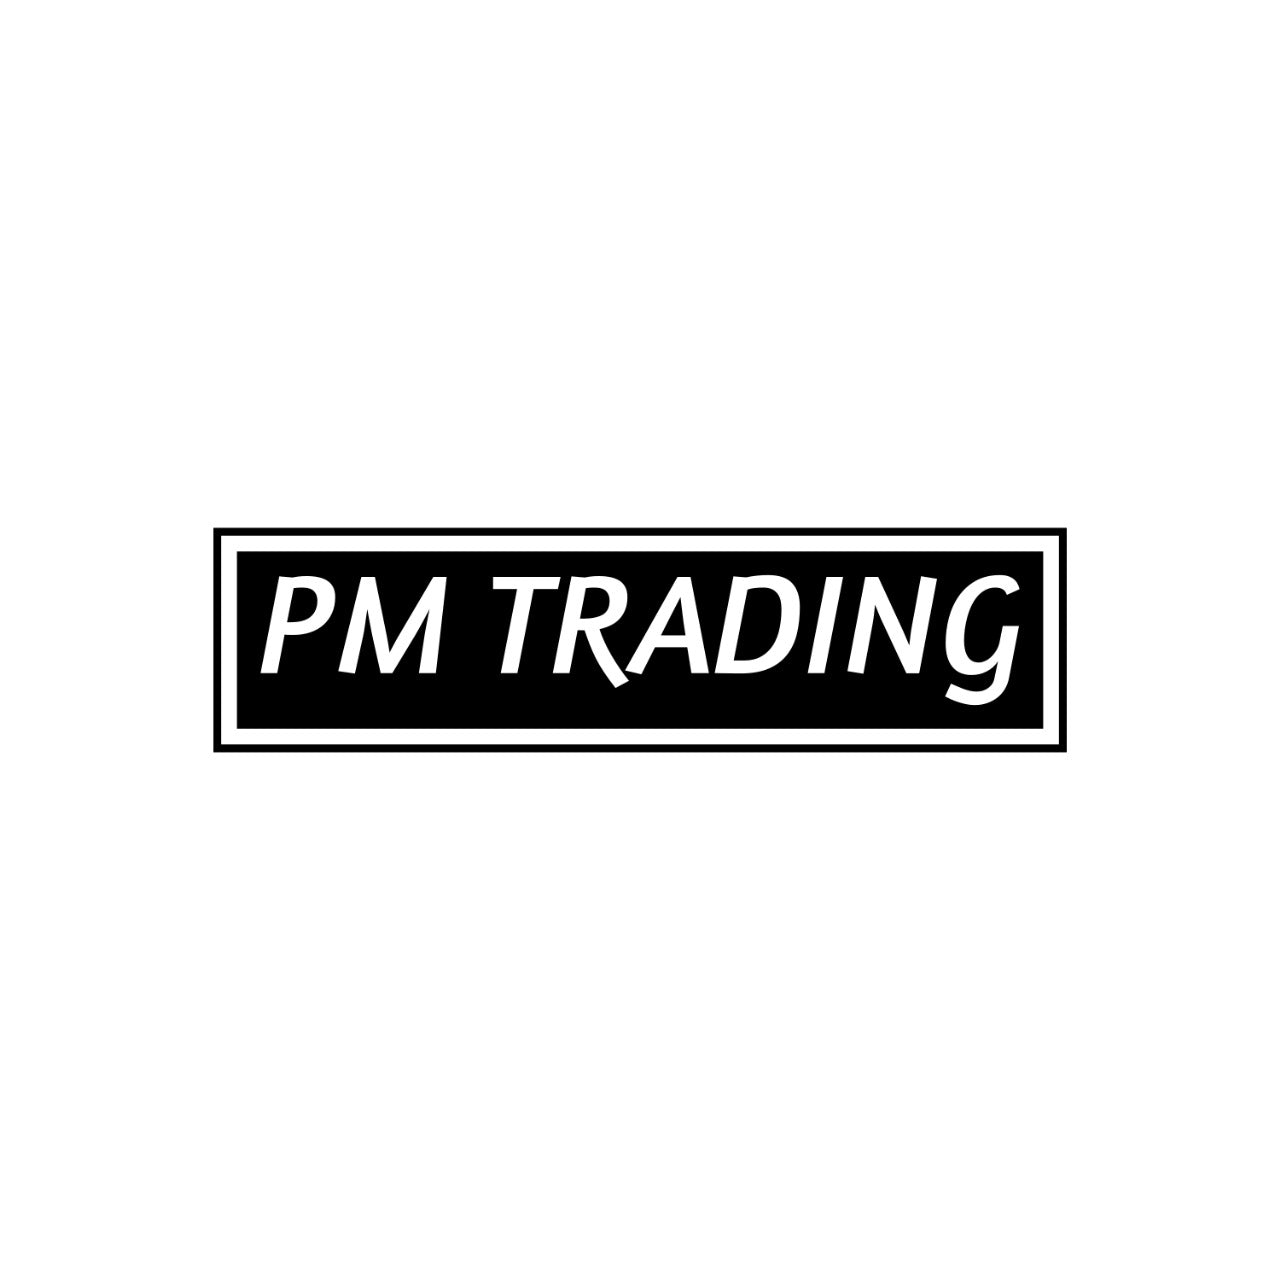 Prime master general trading